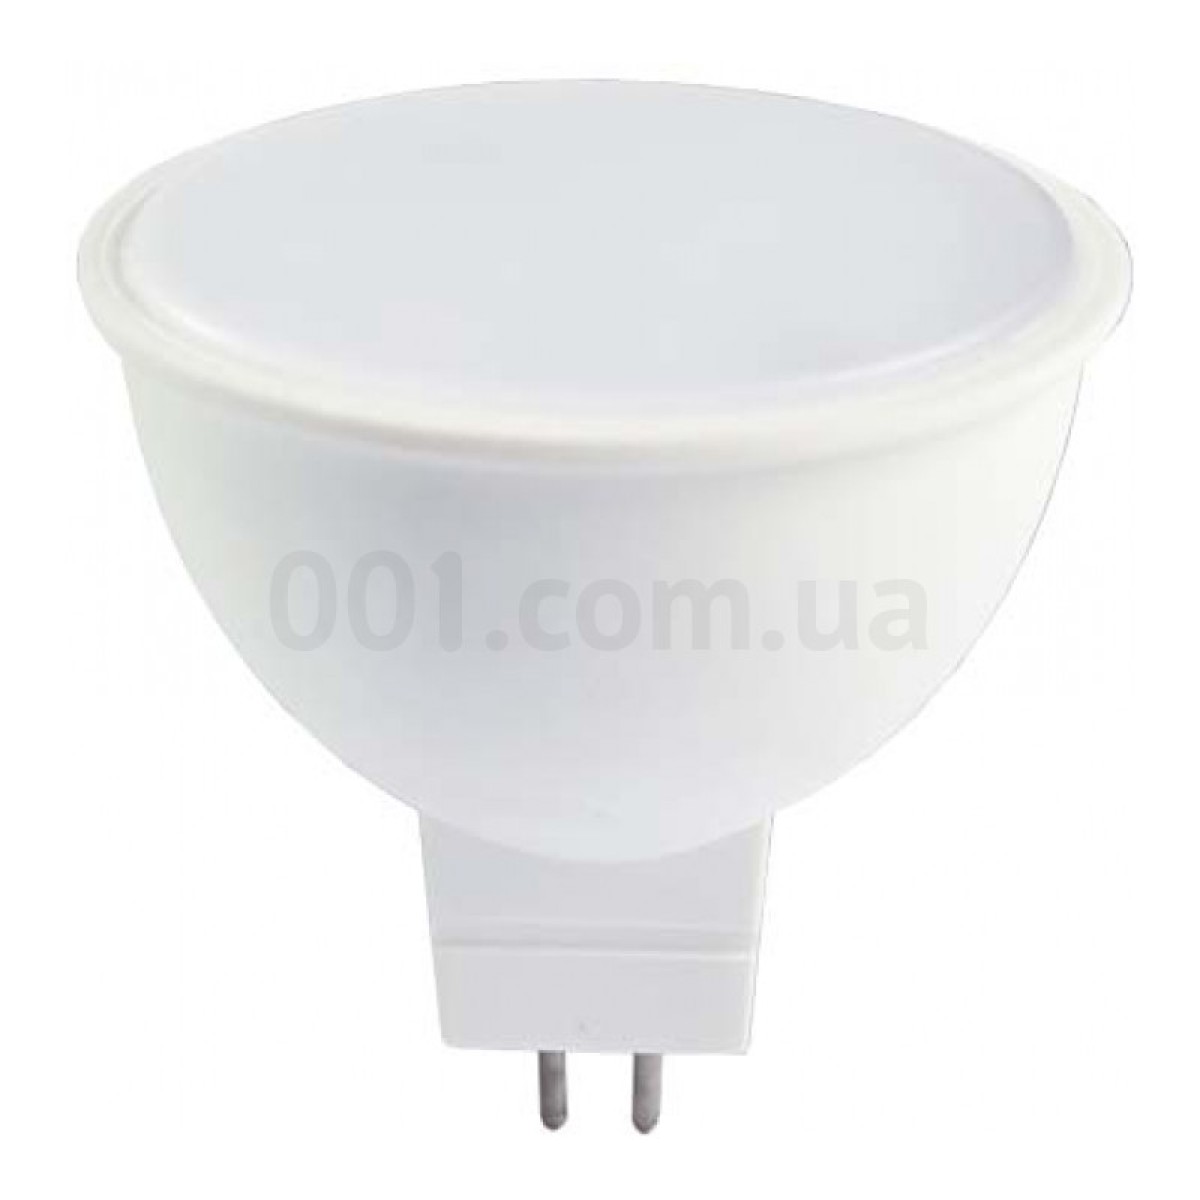 Светодиодная лампа LB-716 MR16 6Вт 6400K G5.3, Feron 256_256.jpg